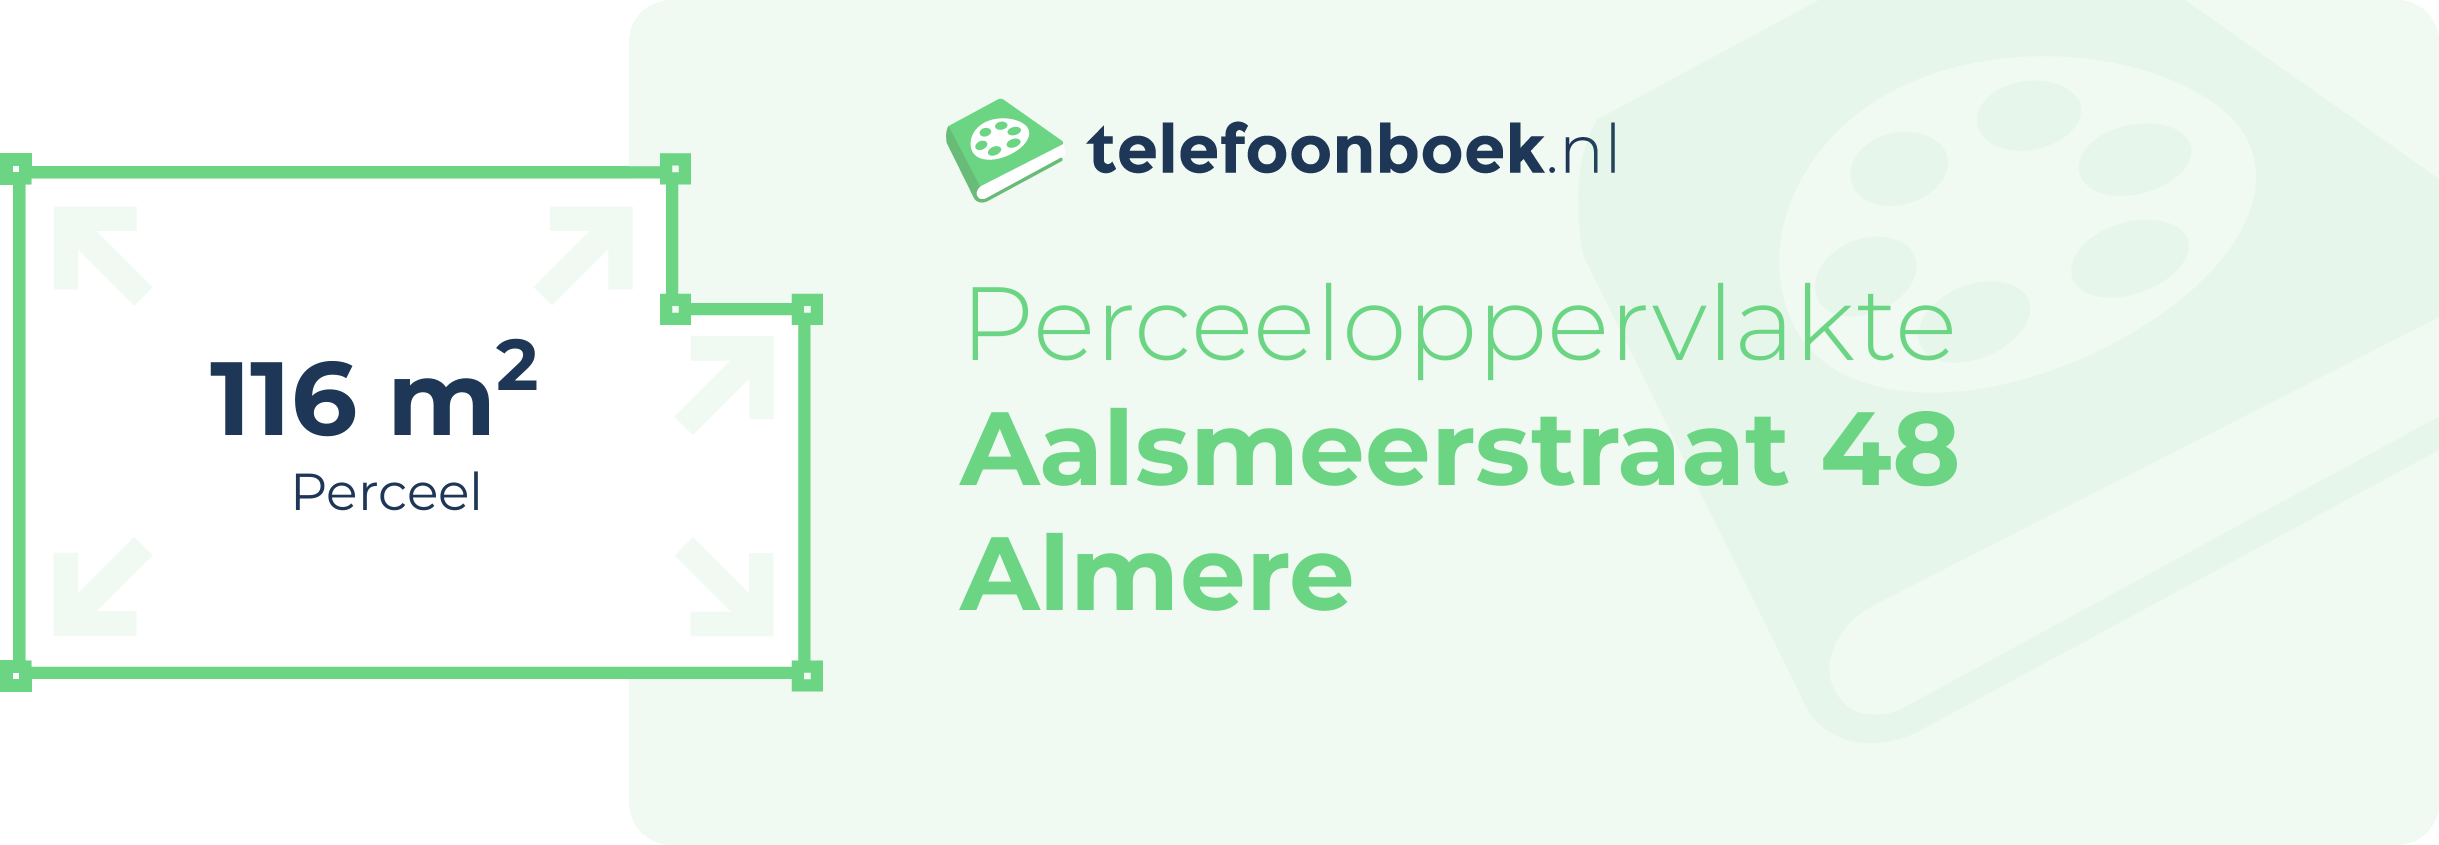 Perceeloppervlakte Aalsmeerstraat 48 Almere